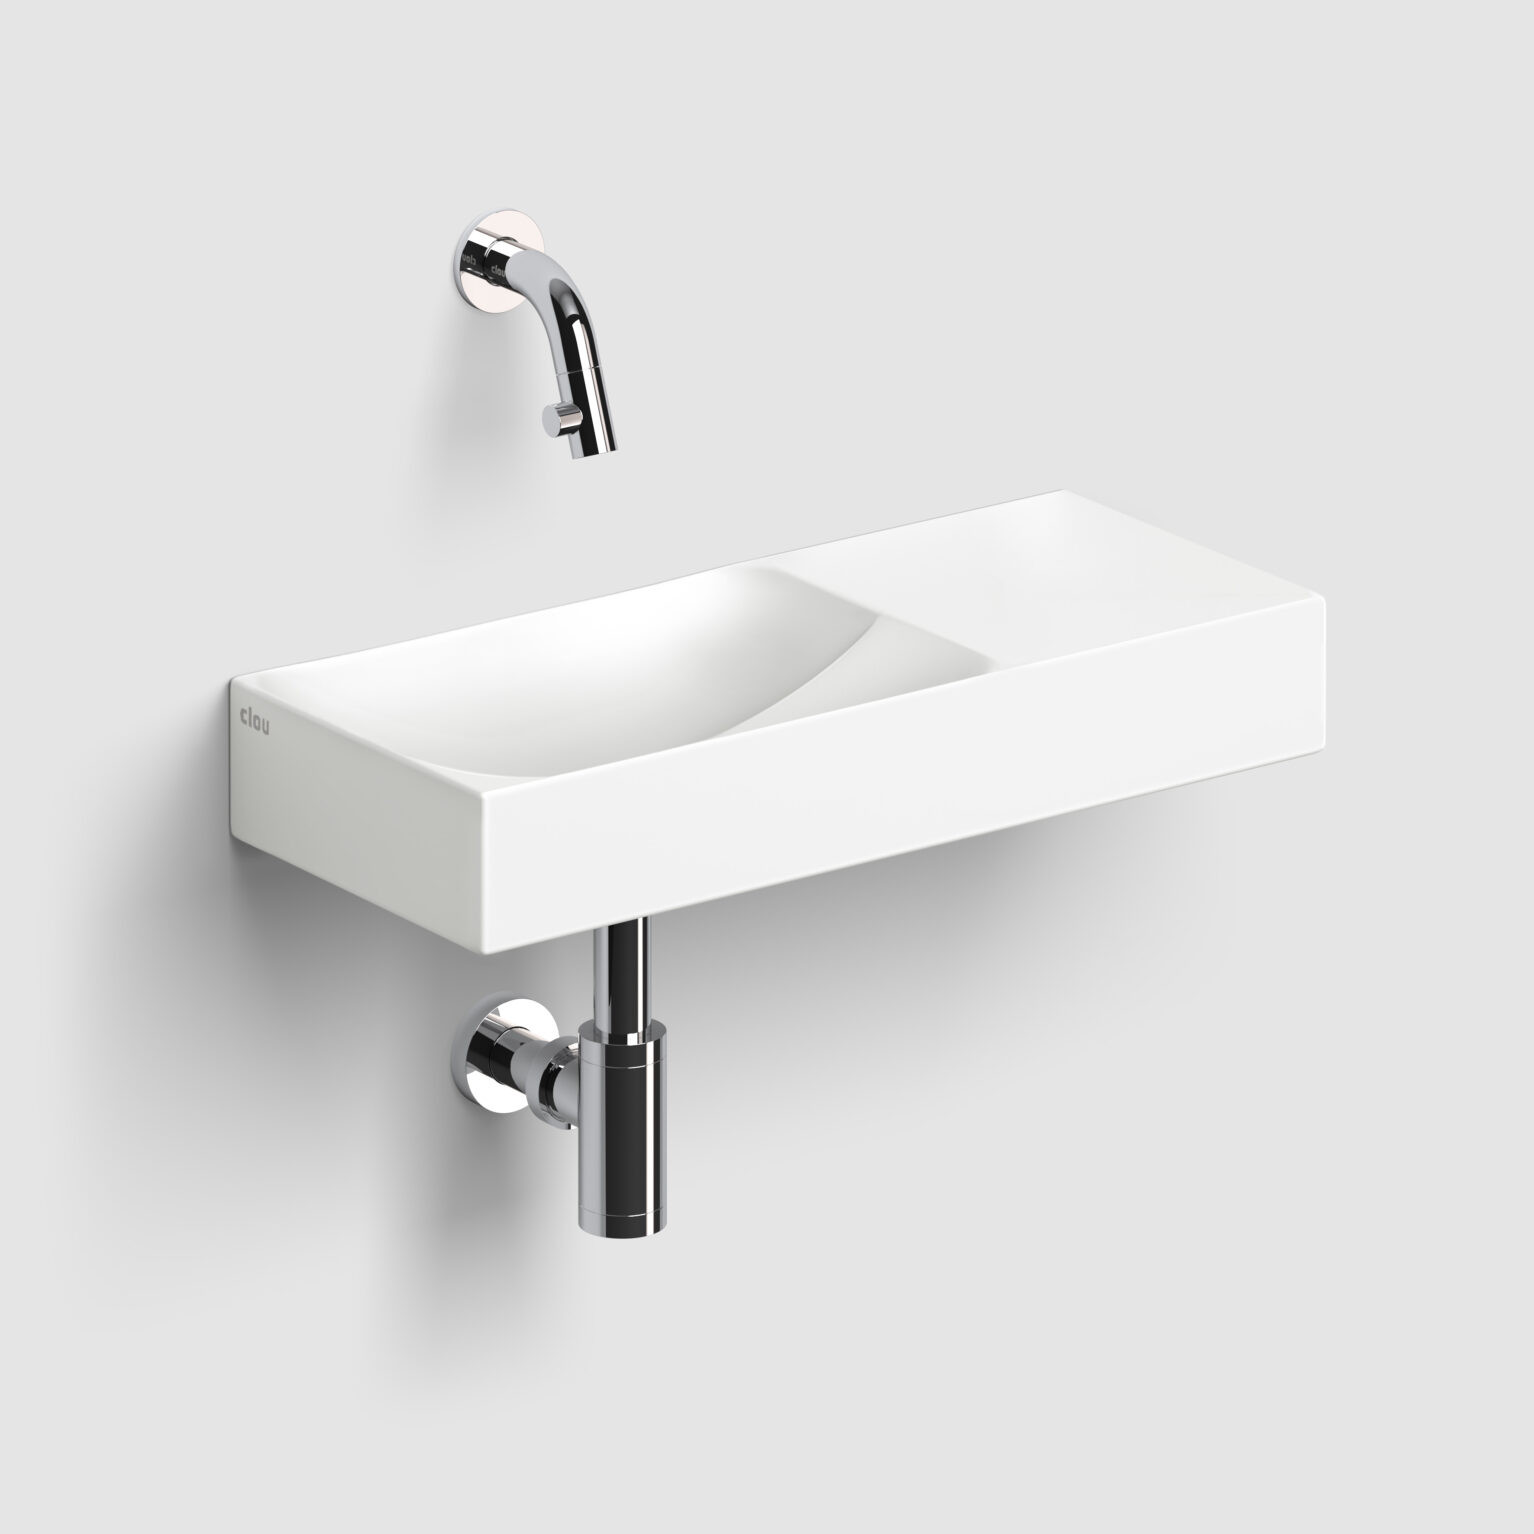 Fontein-wastafel-toilet-badkamer-luxe-sanitair-Vale-clou-CL0302162R-mat-wit-keramiek-45cm-MiniSuk-sifon-Kaldur-wandkraan